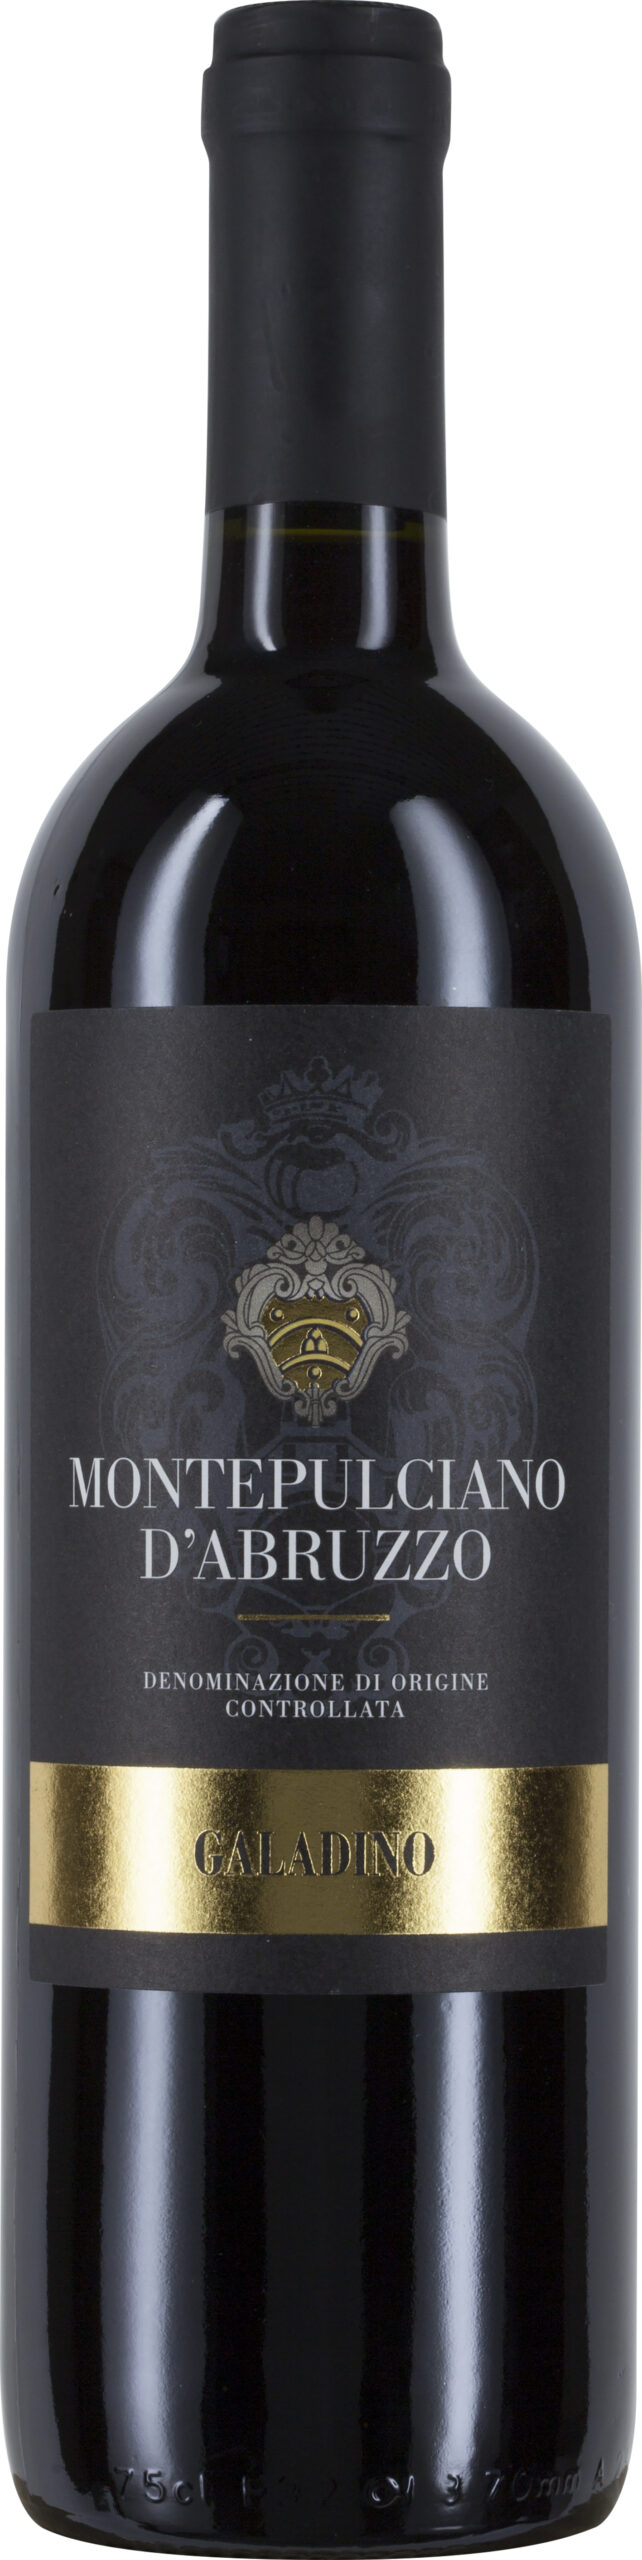 Вино монтепульчано д абруццо. Вино Castello nuovo Montepulciano d'Abruzzo красное. Маниери Монтепульчано д'Абруццо. Вино Монтепульчано д Абруццо красное сухое в Пятерочке. Монтепульчано д'Абруццо красное сухое Пятерочка.